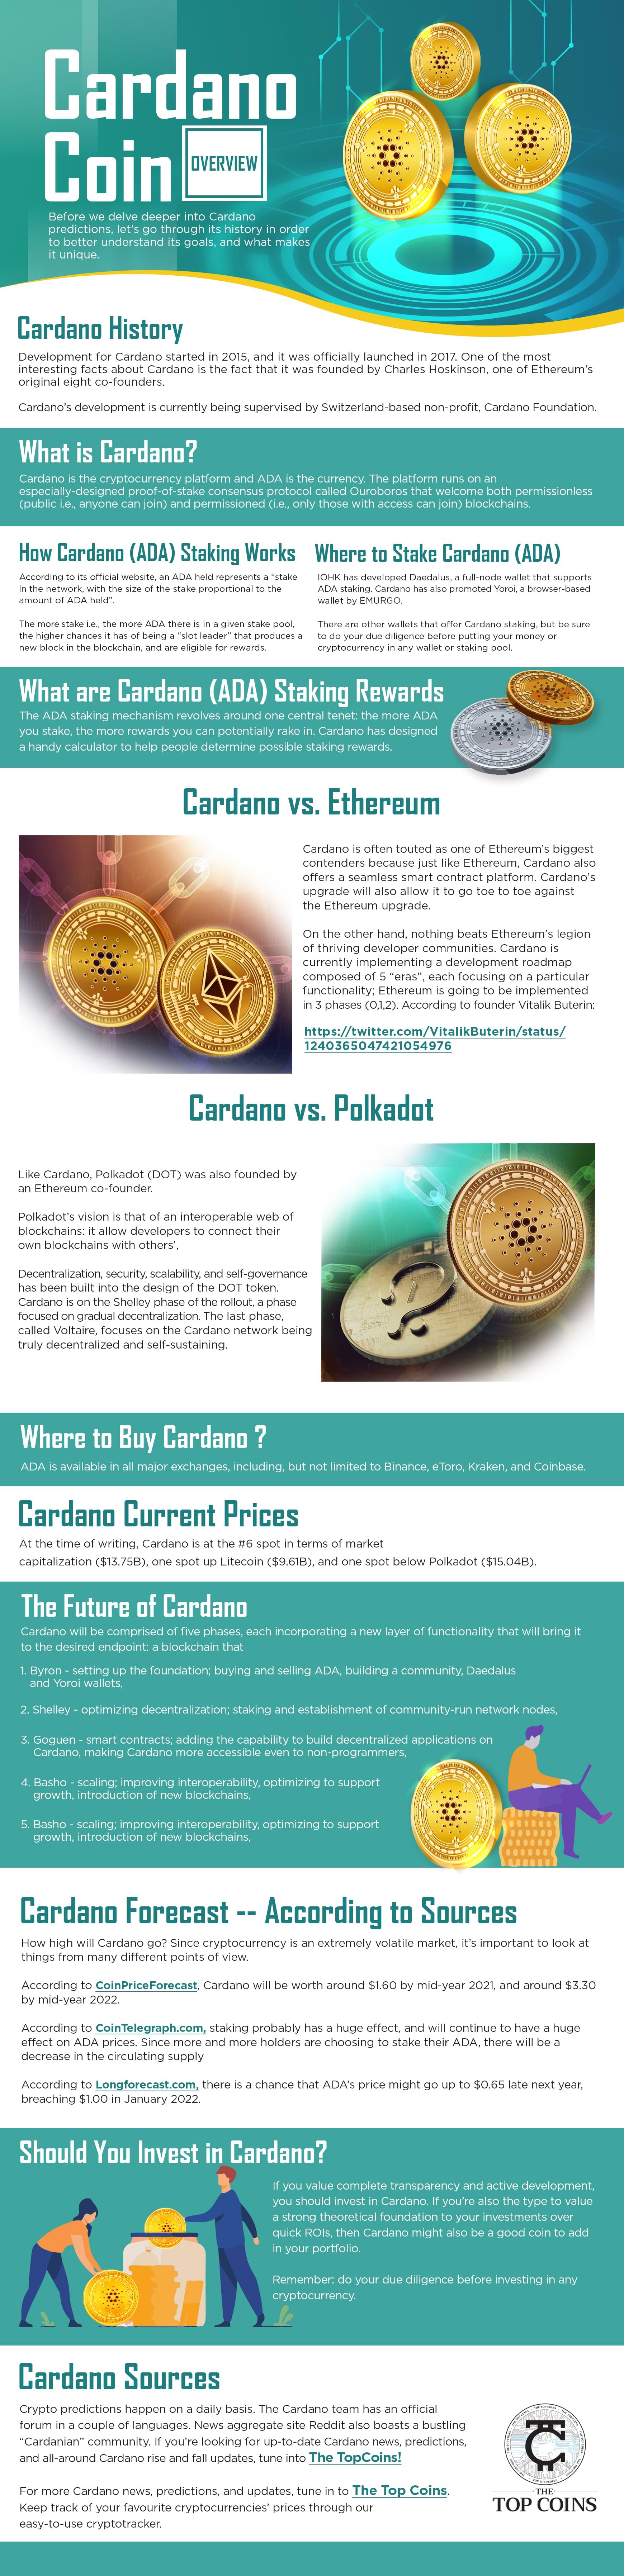 Infographic of Cardano Prediction 2021